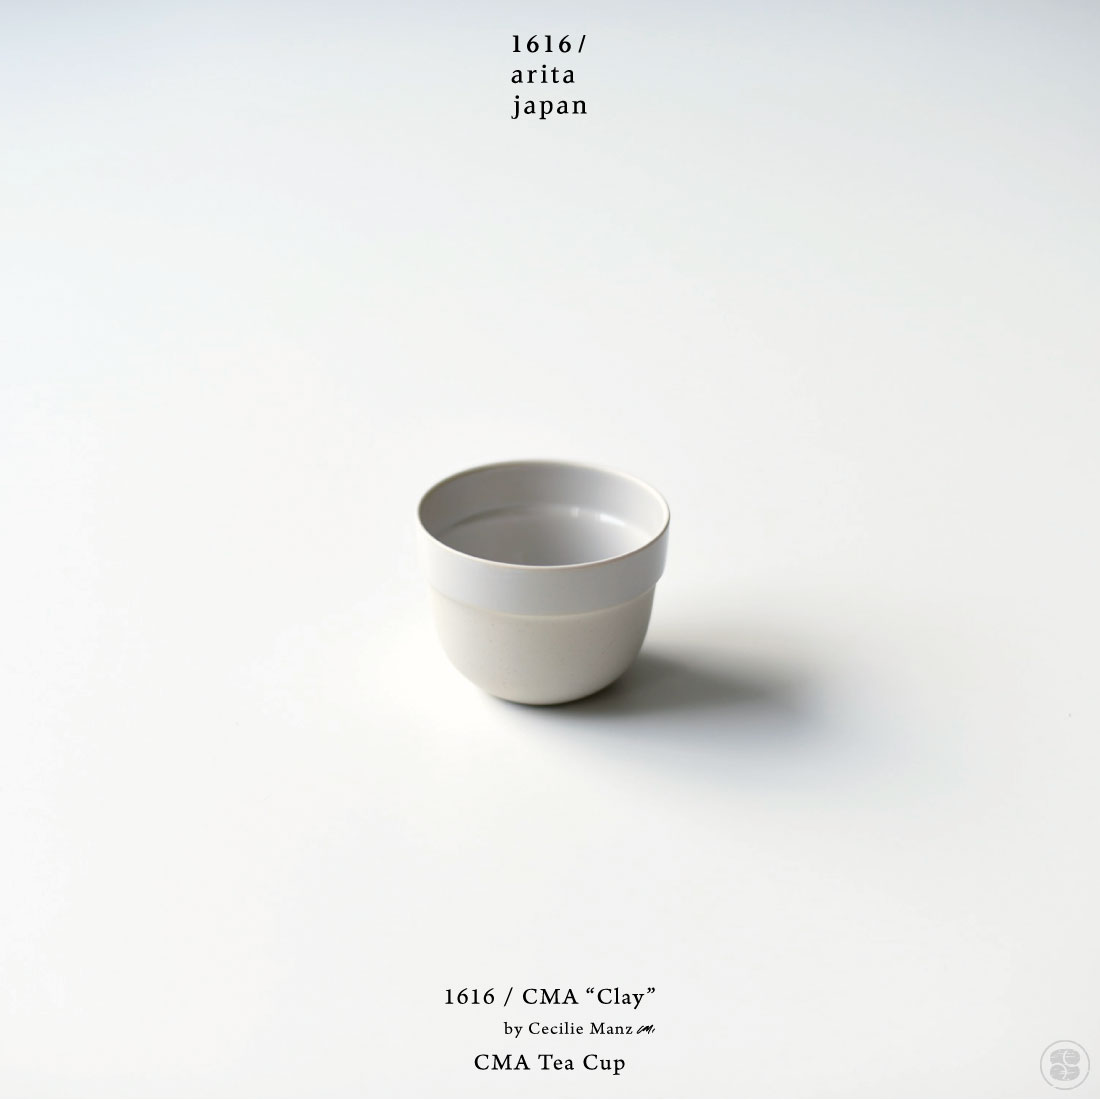 激安通販新作 1616 arita japan CMA “Clay” Tea Cup Cecilie Manz